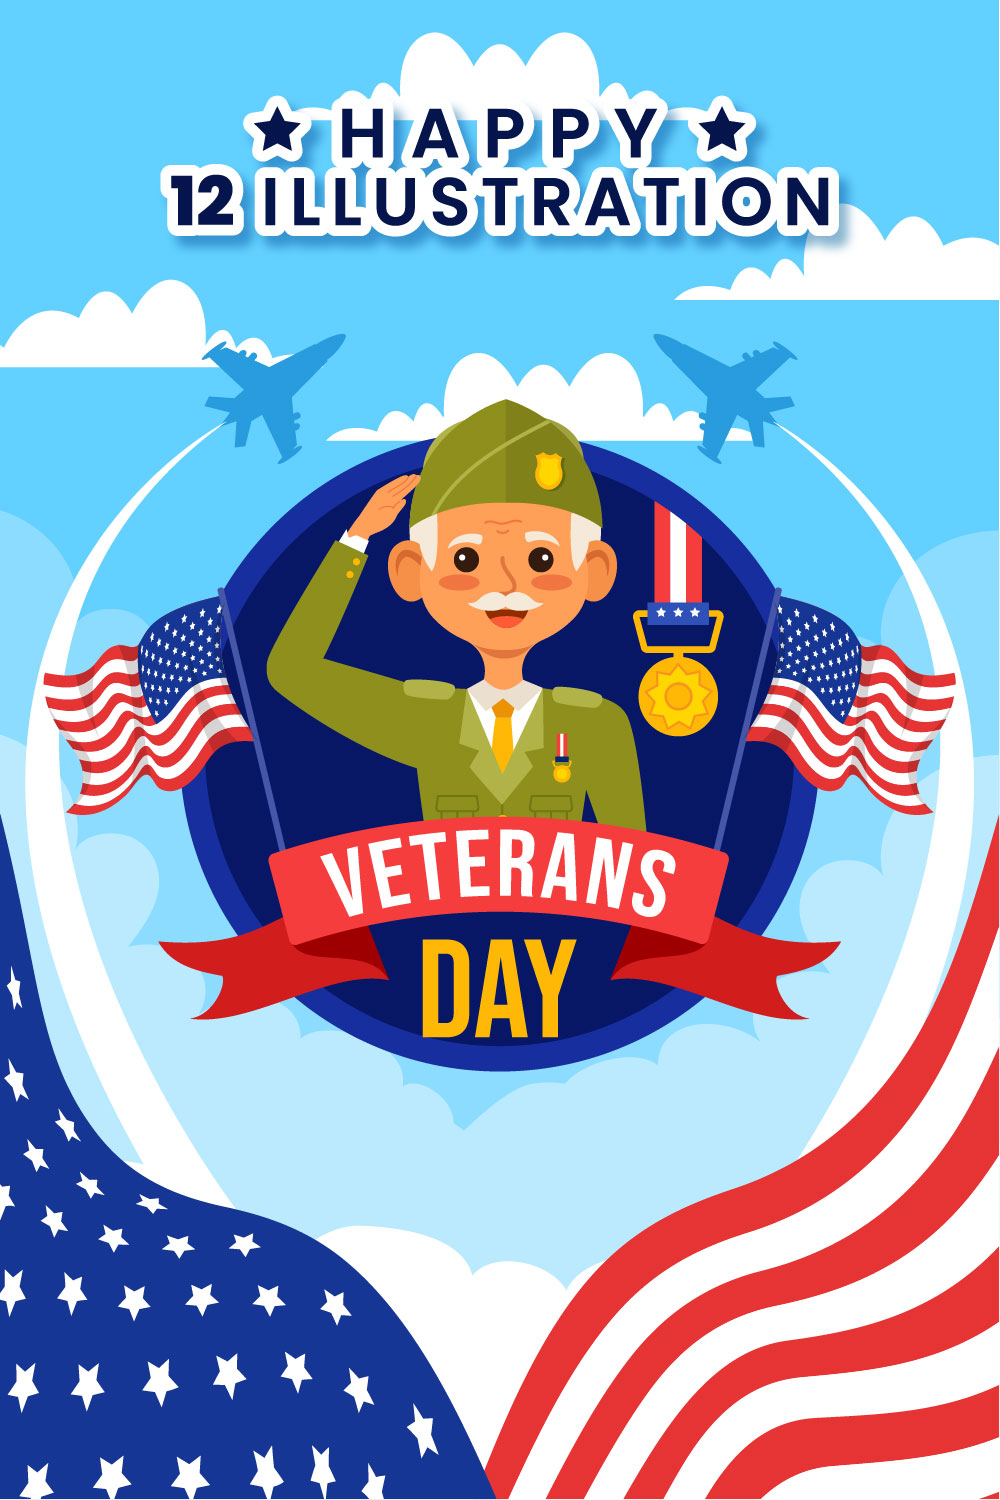 12 Happy Veterans Day Illustration pinterest preview image.